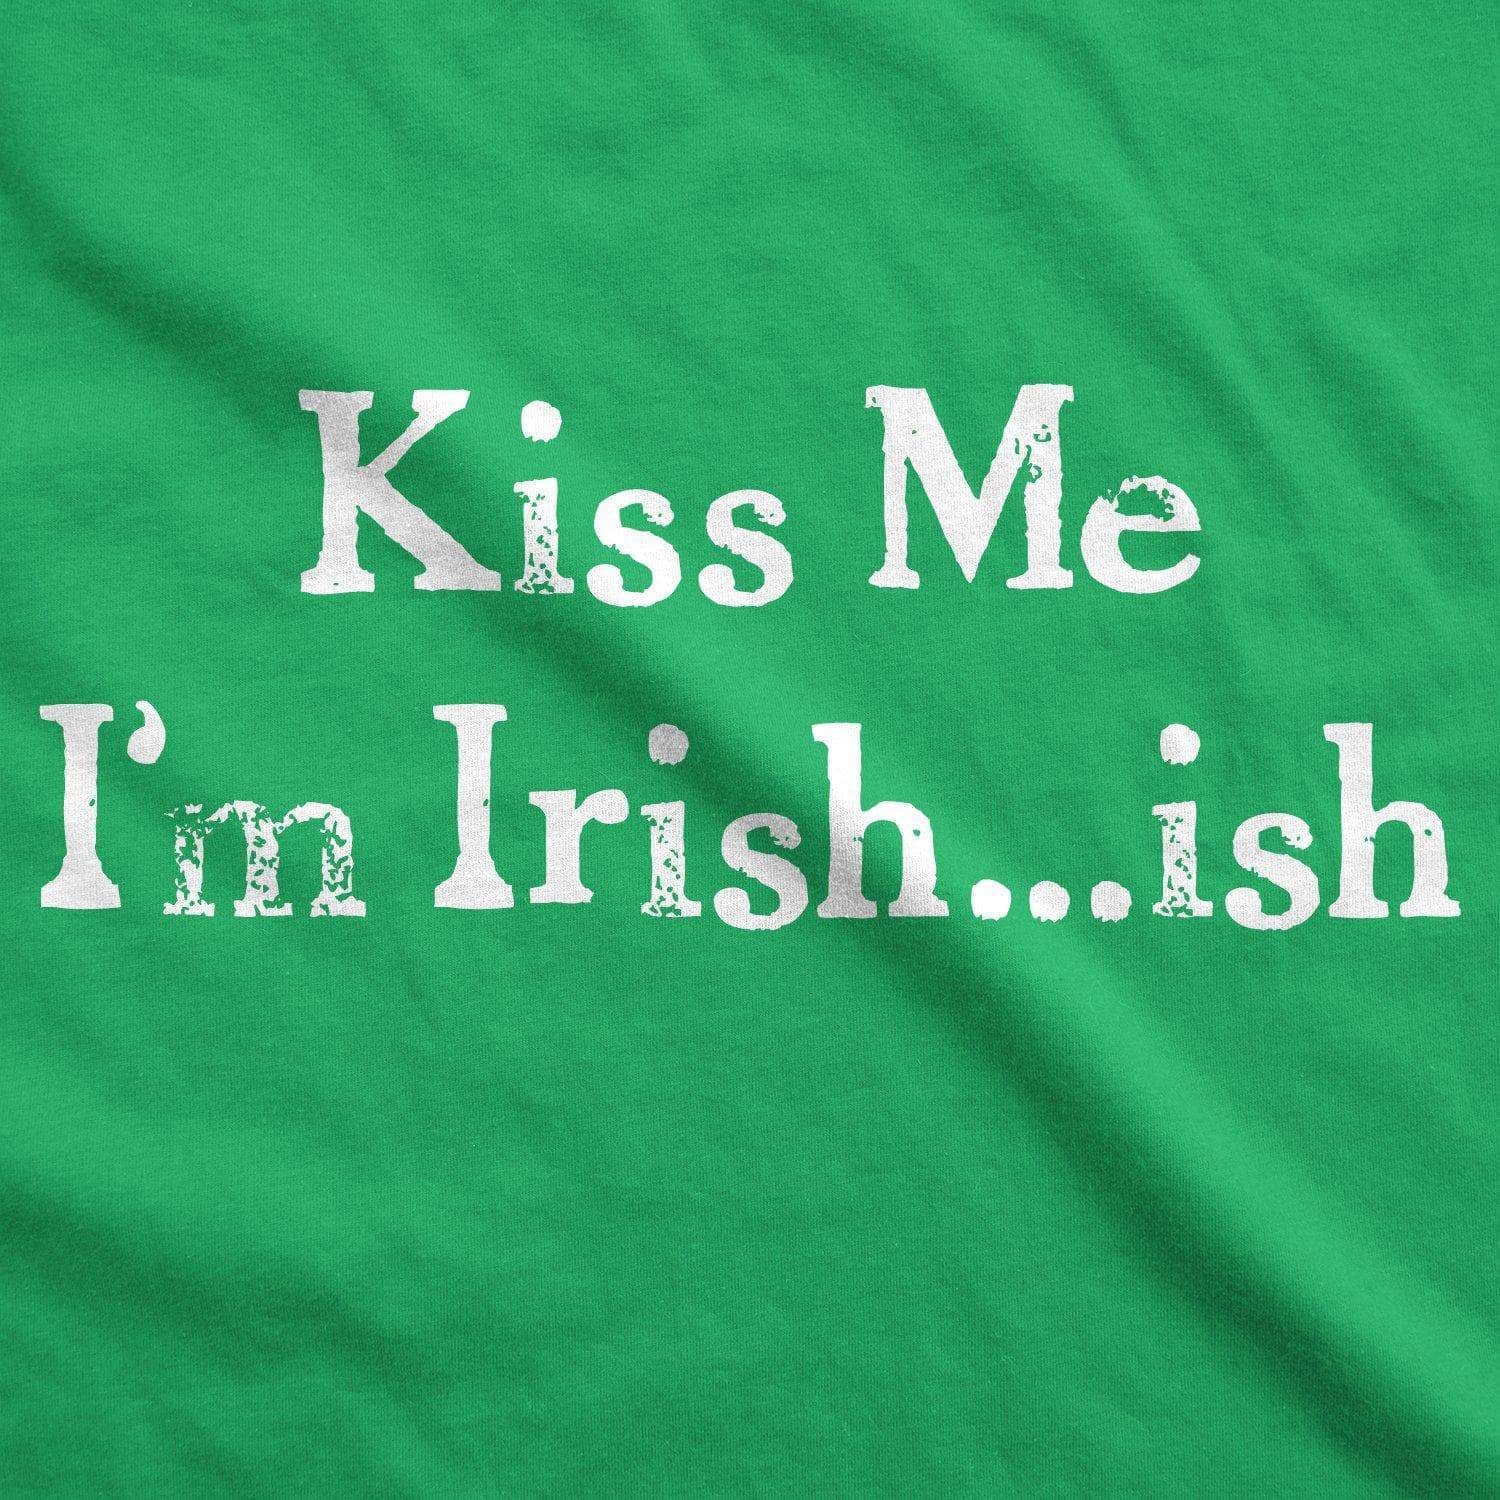 Kiss Me I'm Irish Crew Neck Sweatshirt  -  Crazy Dog T-Shirts